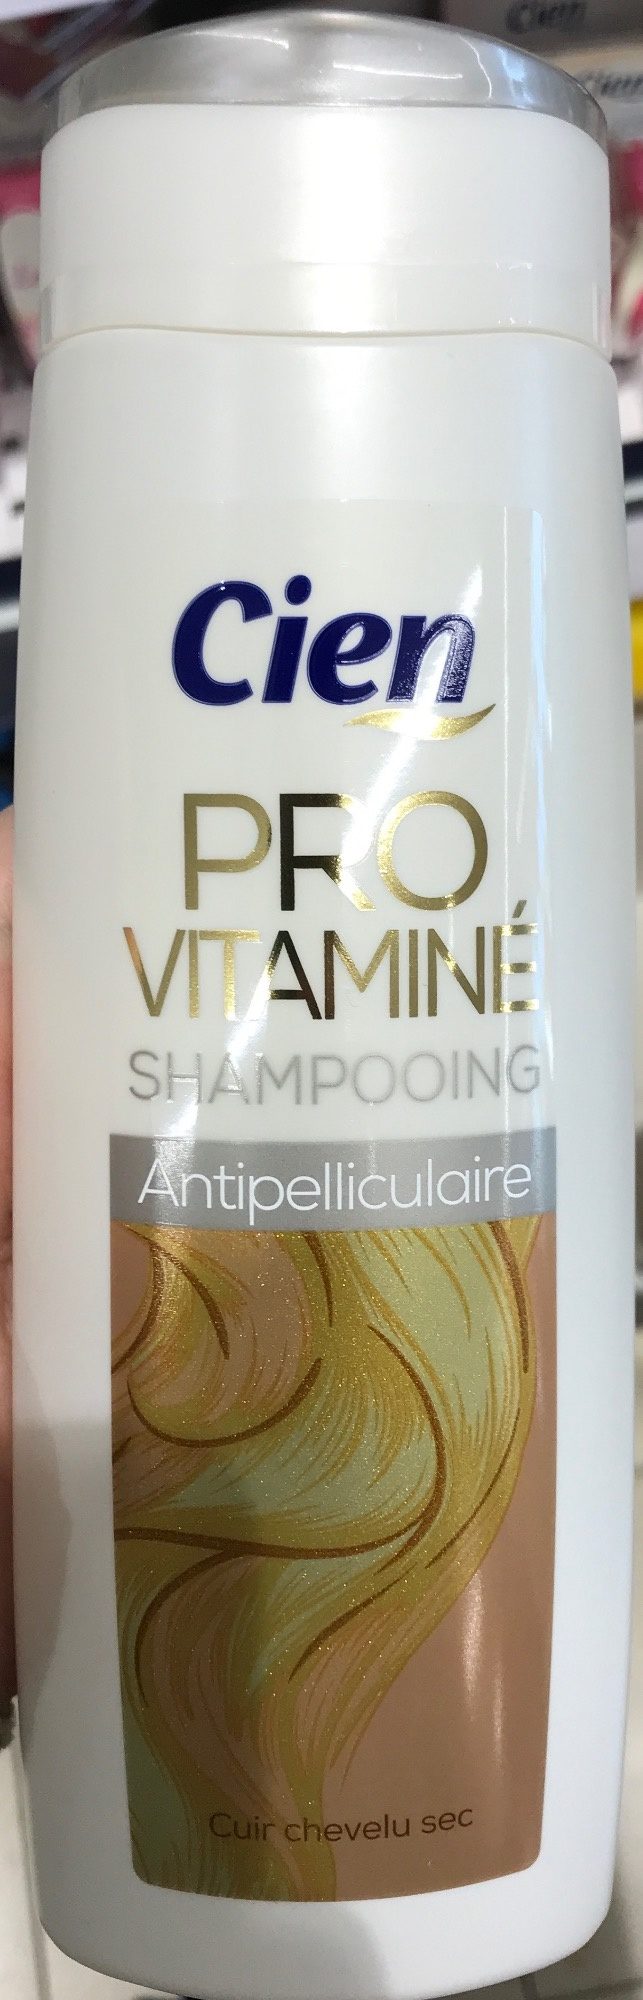 Provitaminé Shampooing Antipelliculaire - Продукт - fr